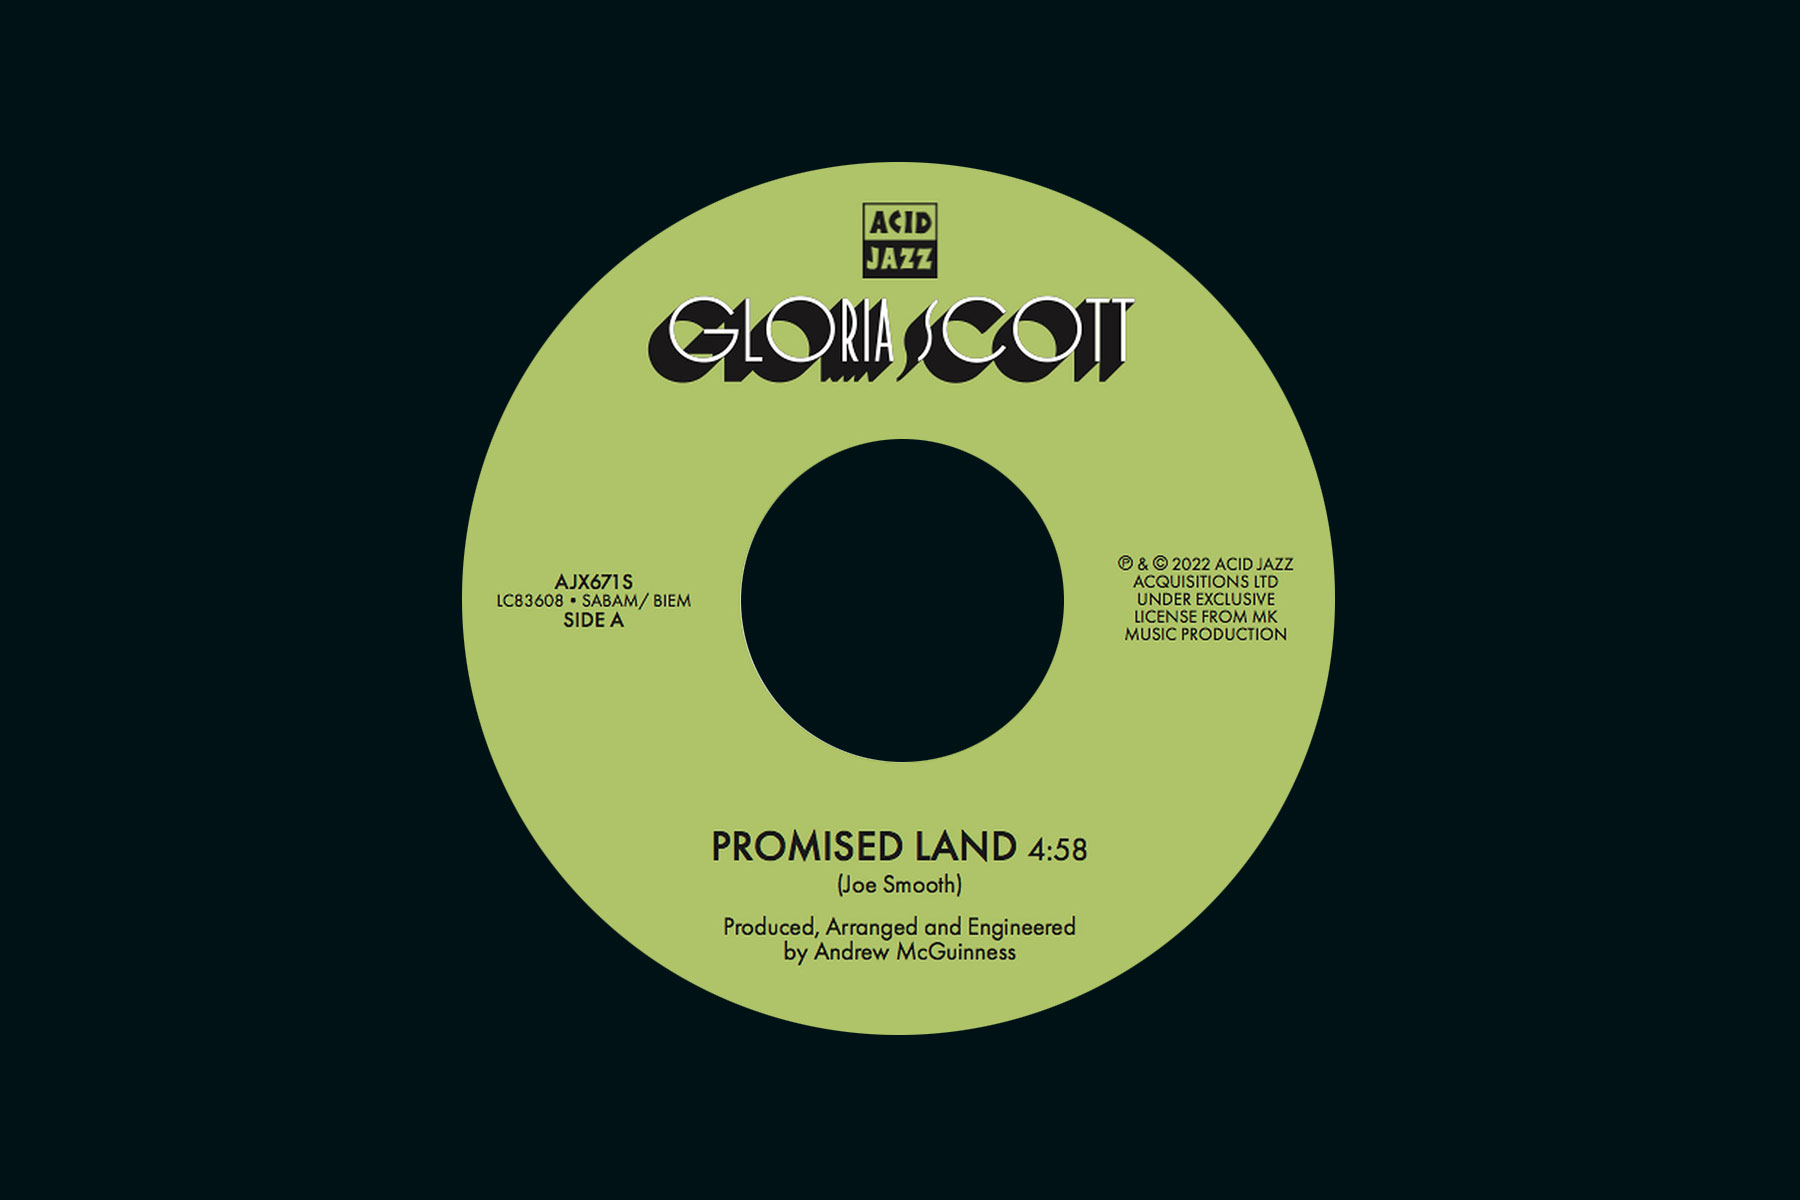 Gloria Scott covers Joe Smooth's house music classic "Promised Land"